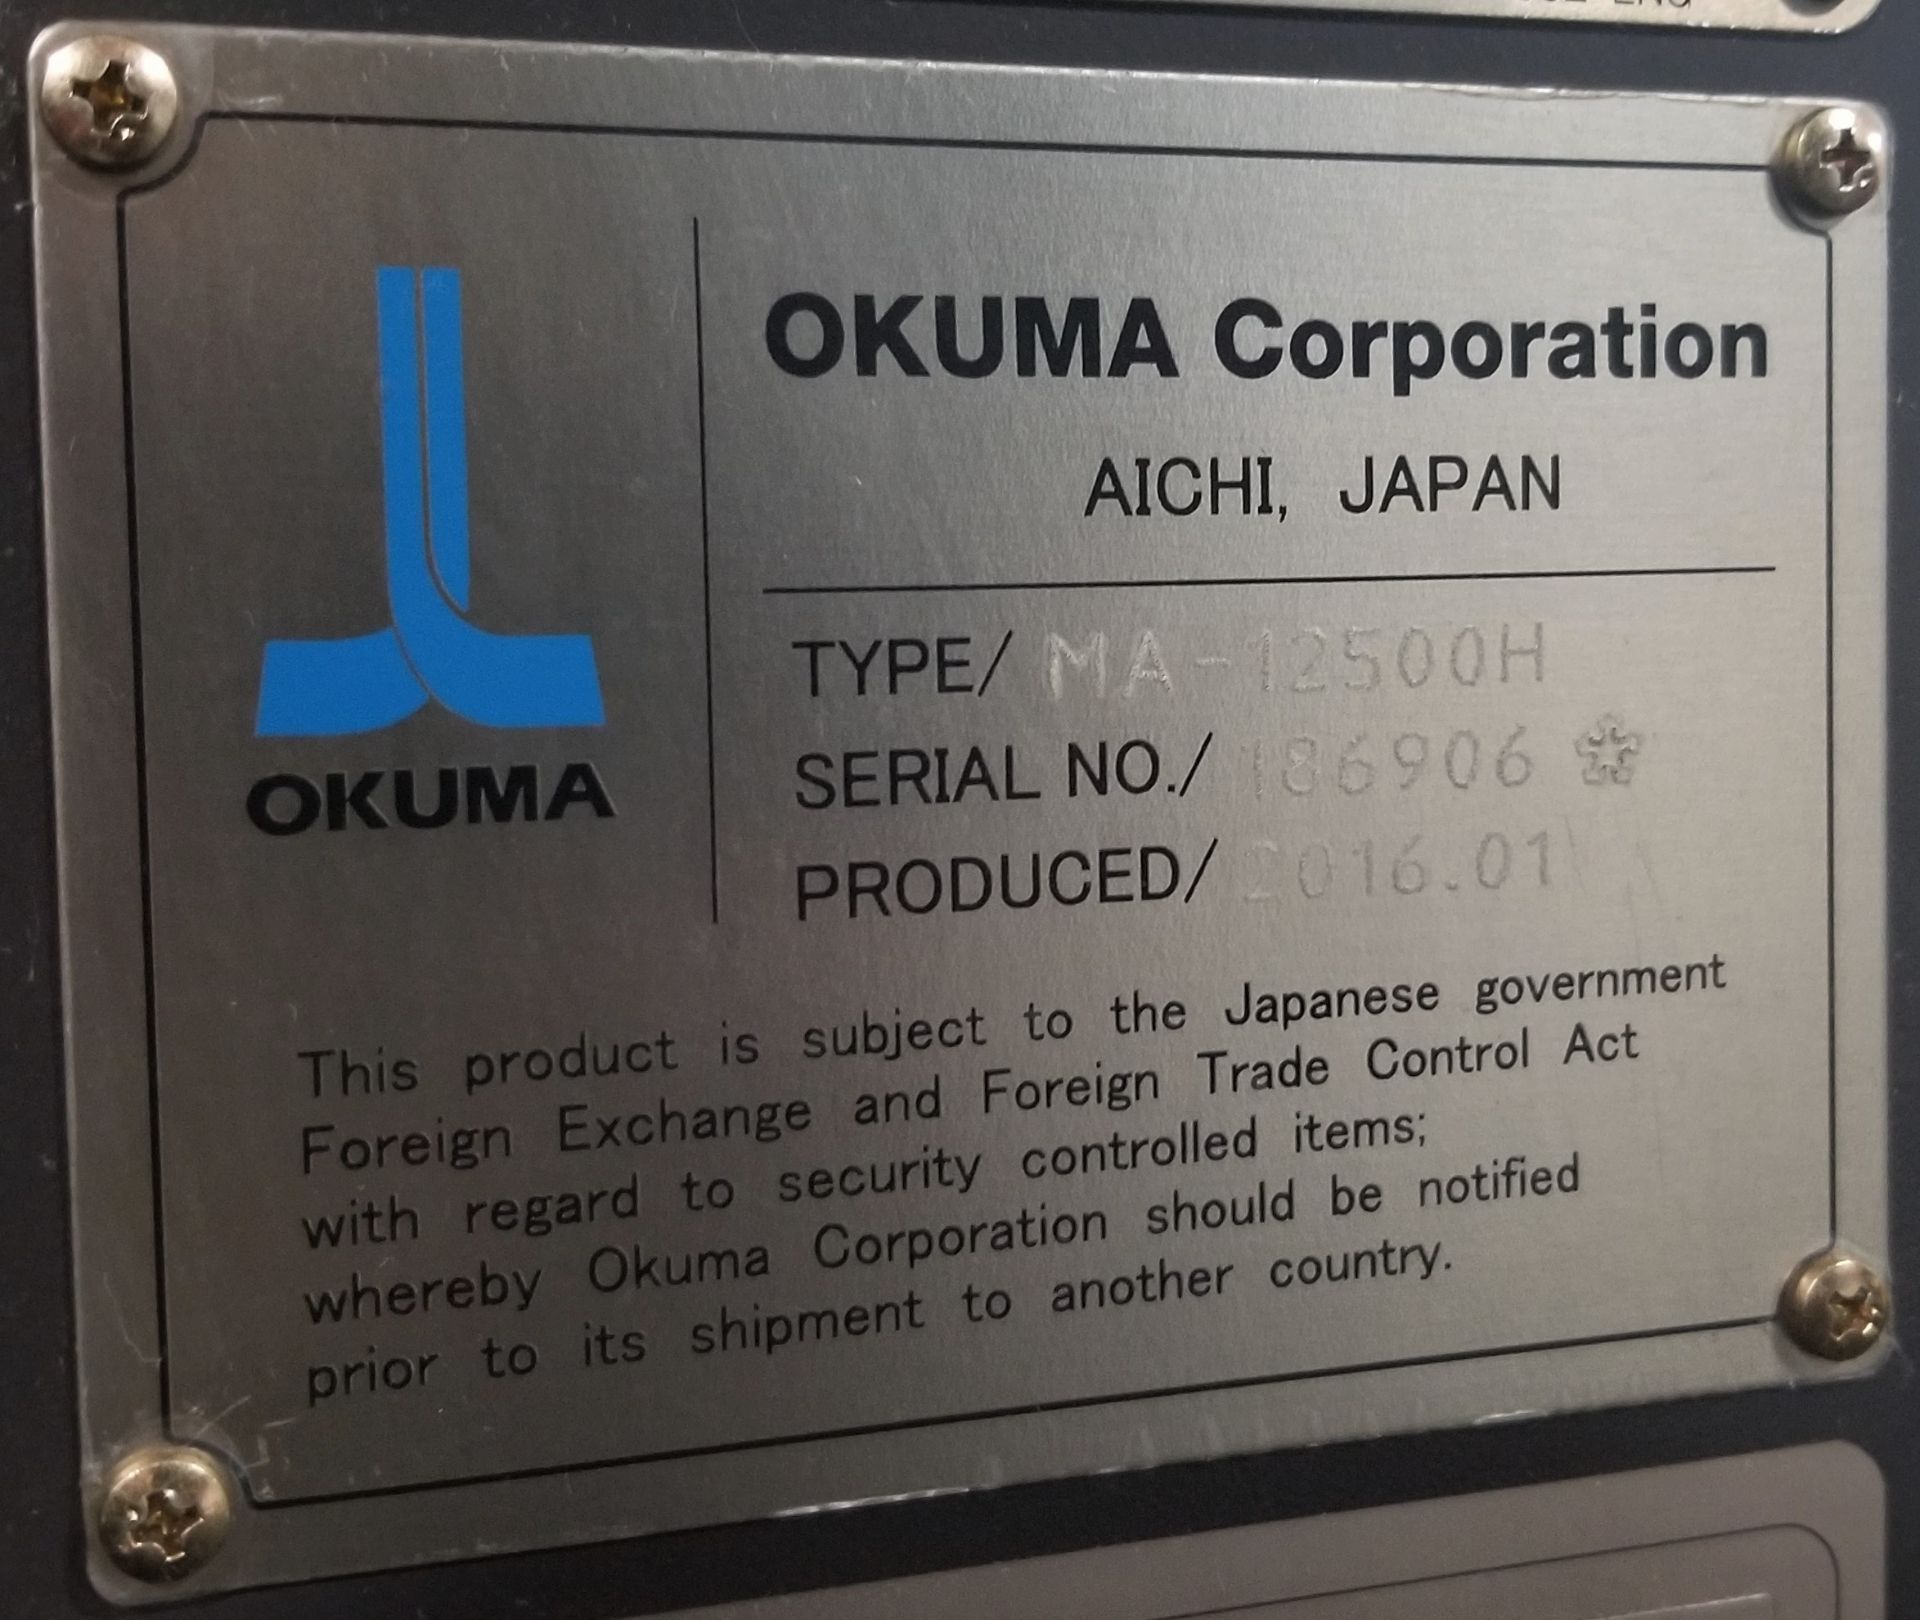 OKUMA (2016) MA-12500H SPACE CENTER TWIN PALLET CNC HORIZONTAL MACHINING CENTER WITH OKUMA - Image 14 of 14